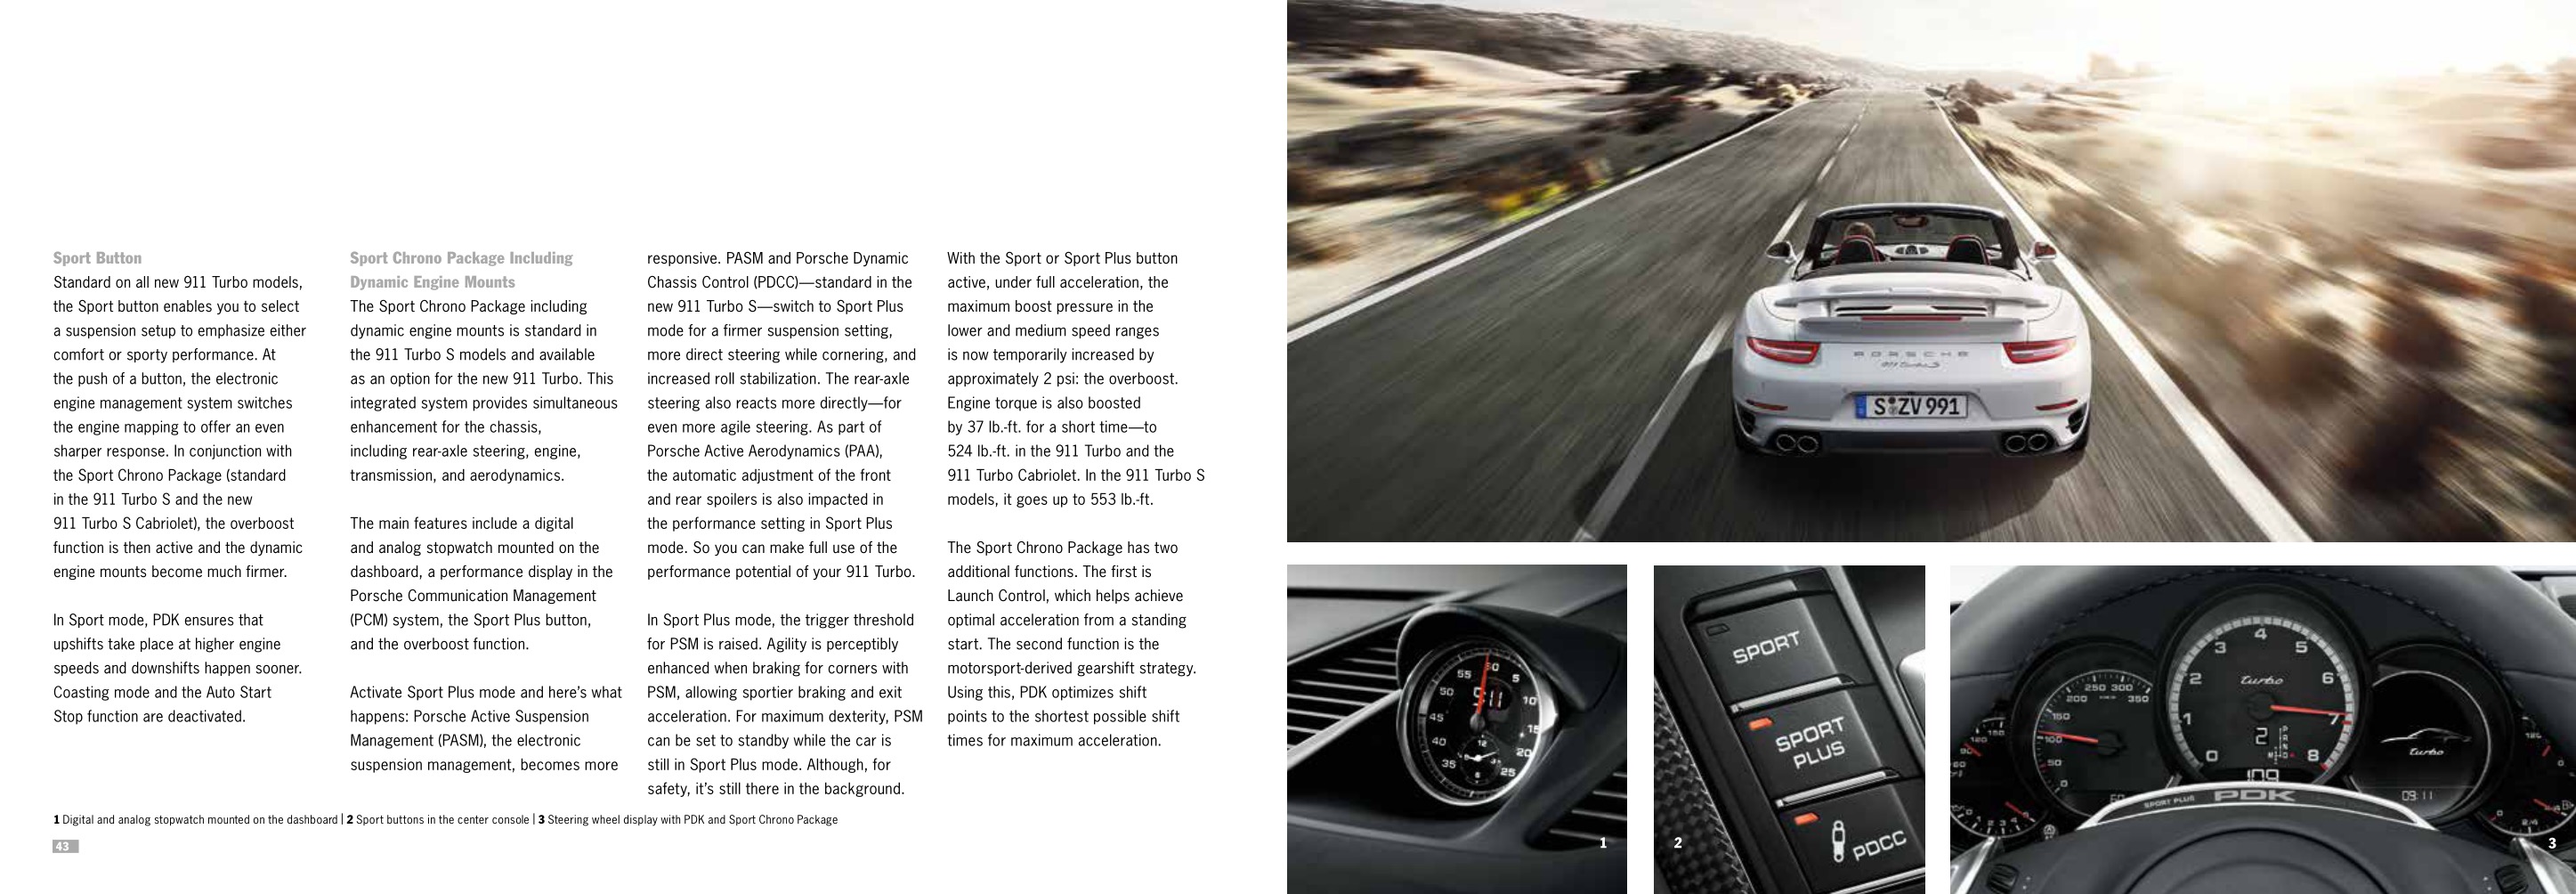 2014 Porsche 911 Turbo Brochure Page 18